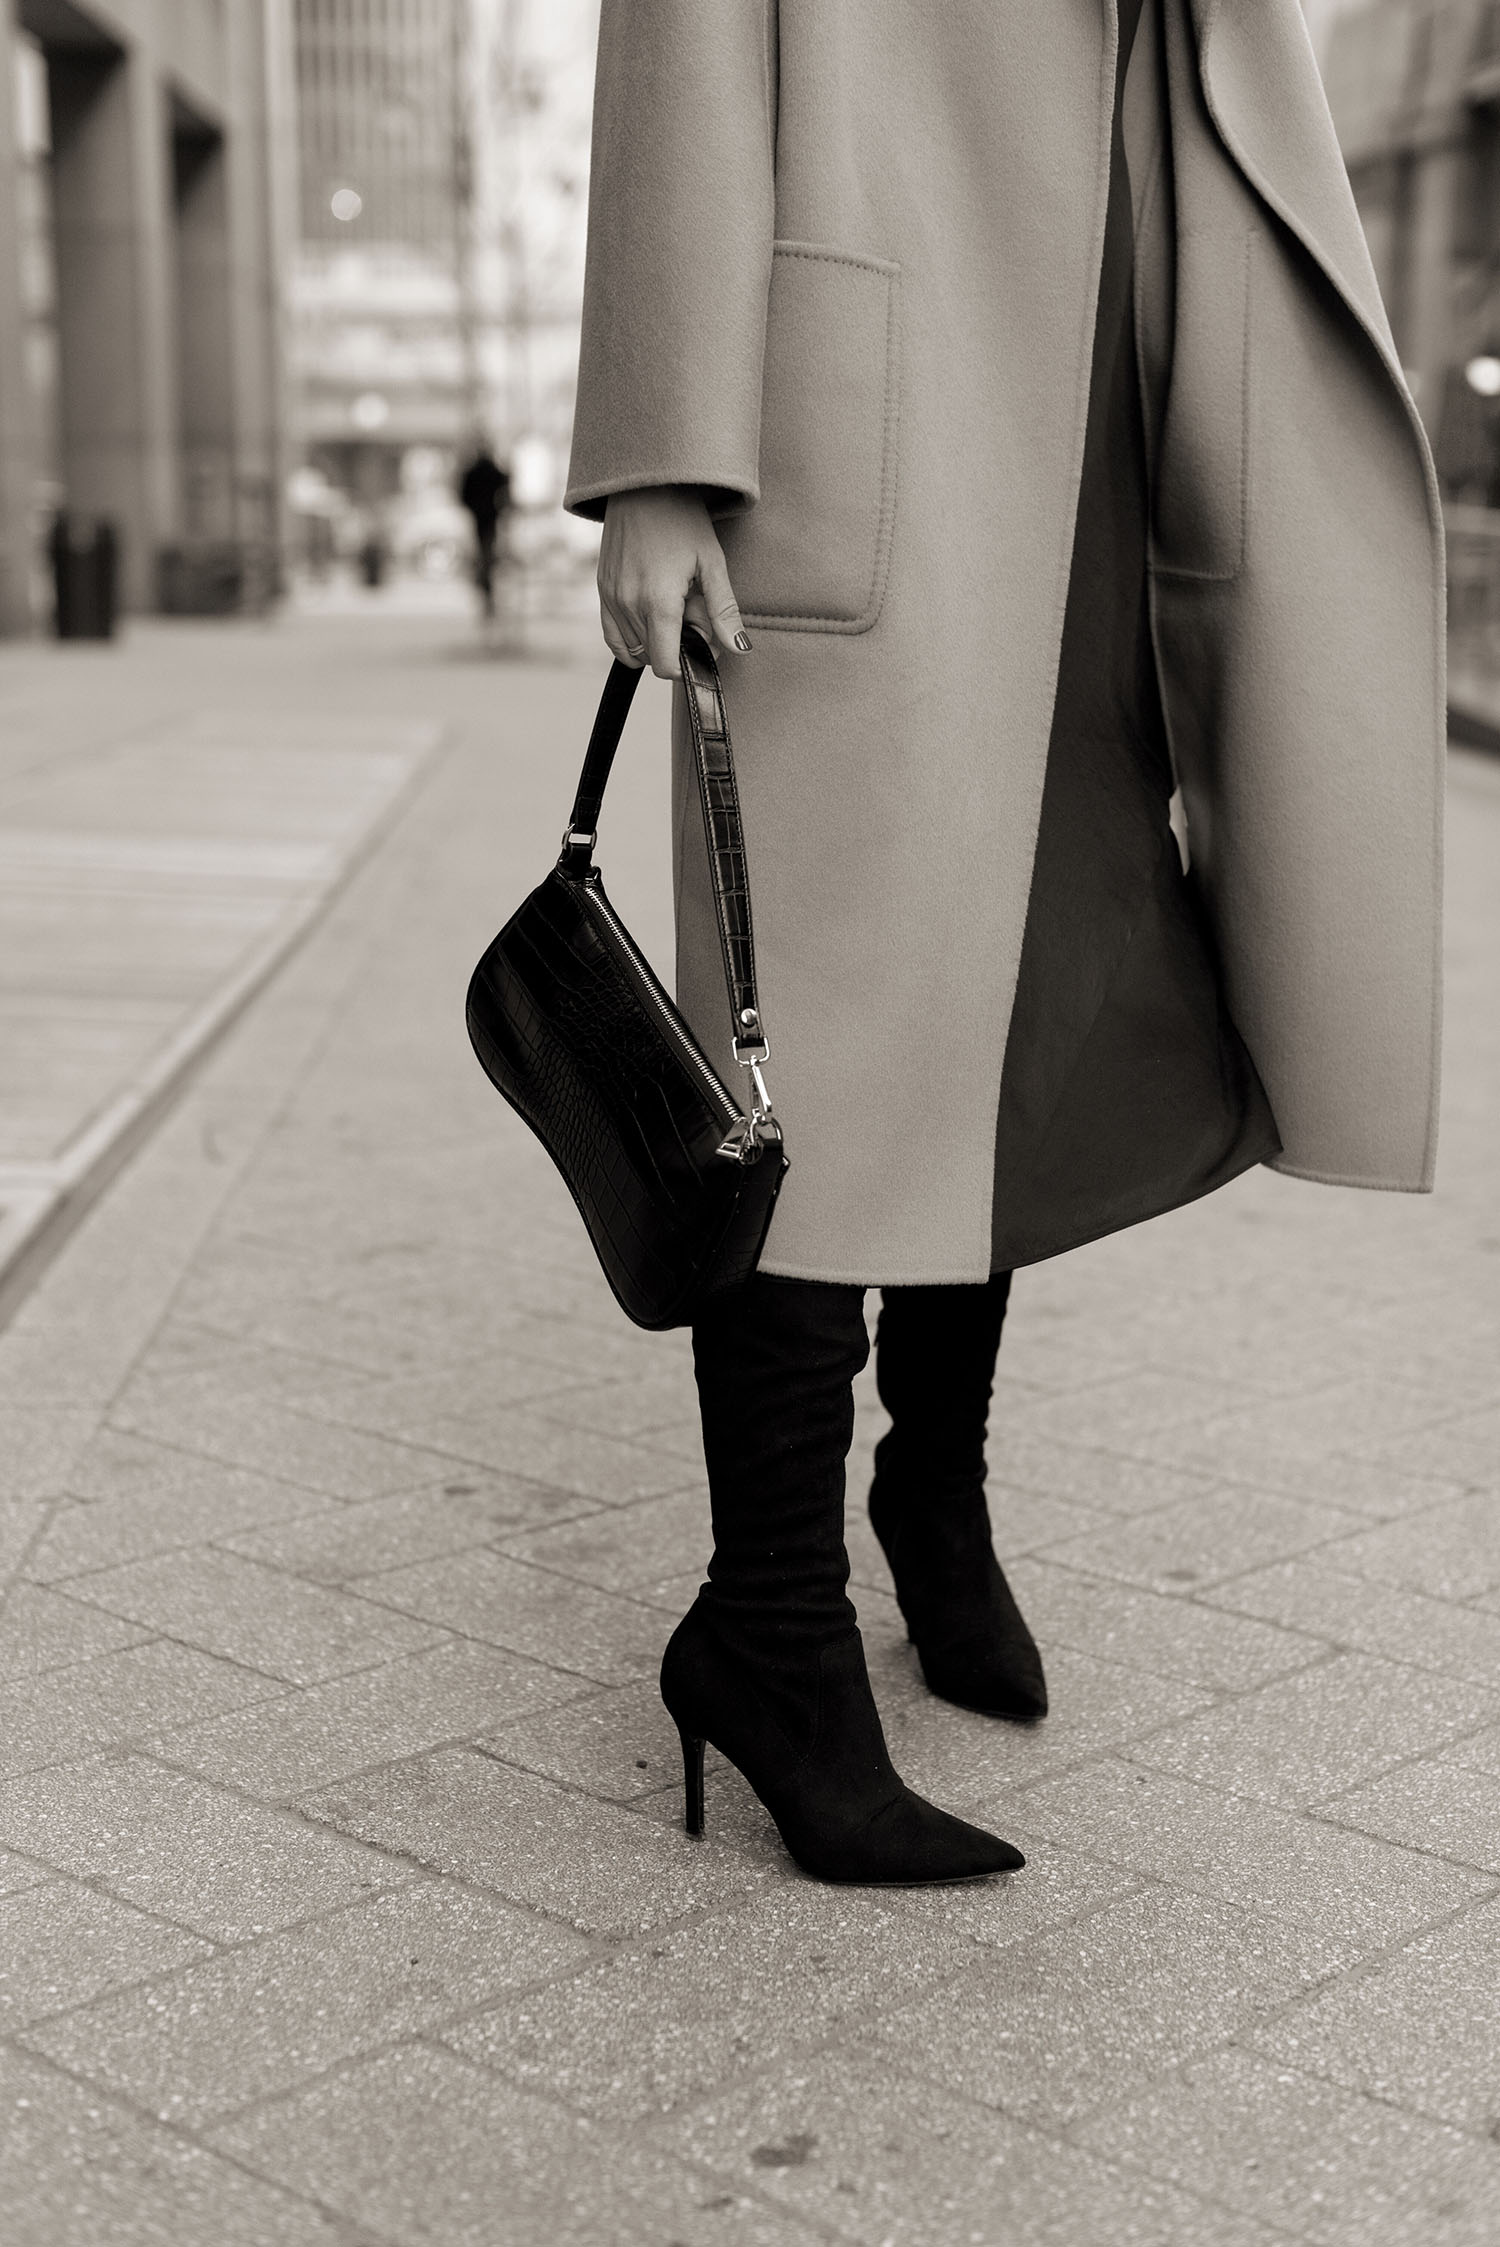 Coco & Vera - The Curated cashmere coat, Aldo boots, JW Pei handbag